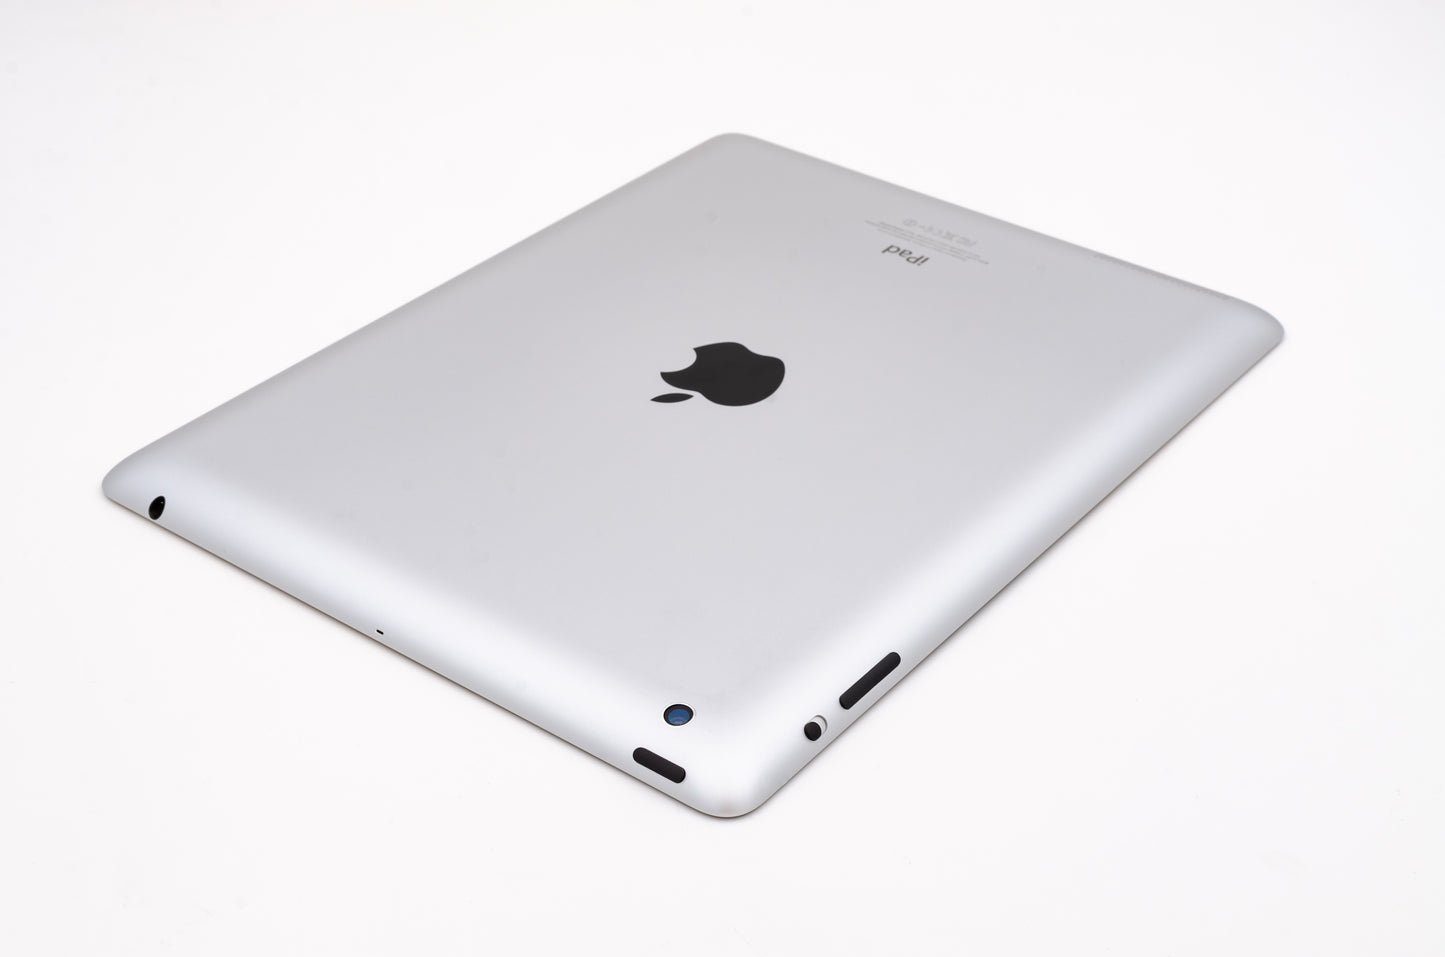 apple-2012-9.7-inch-ipad-4-a1458-silver/white-3